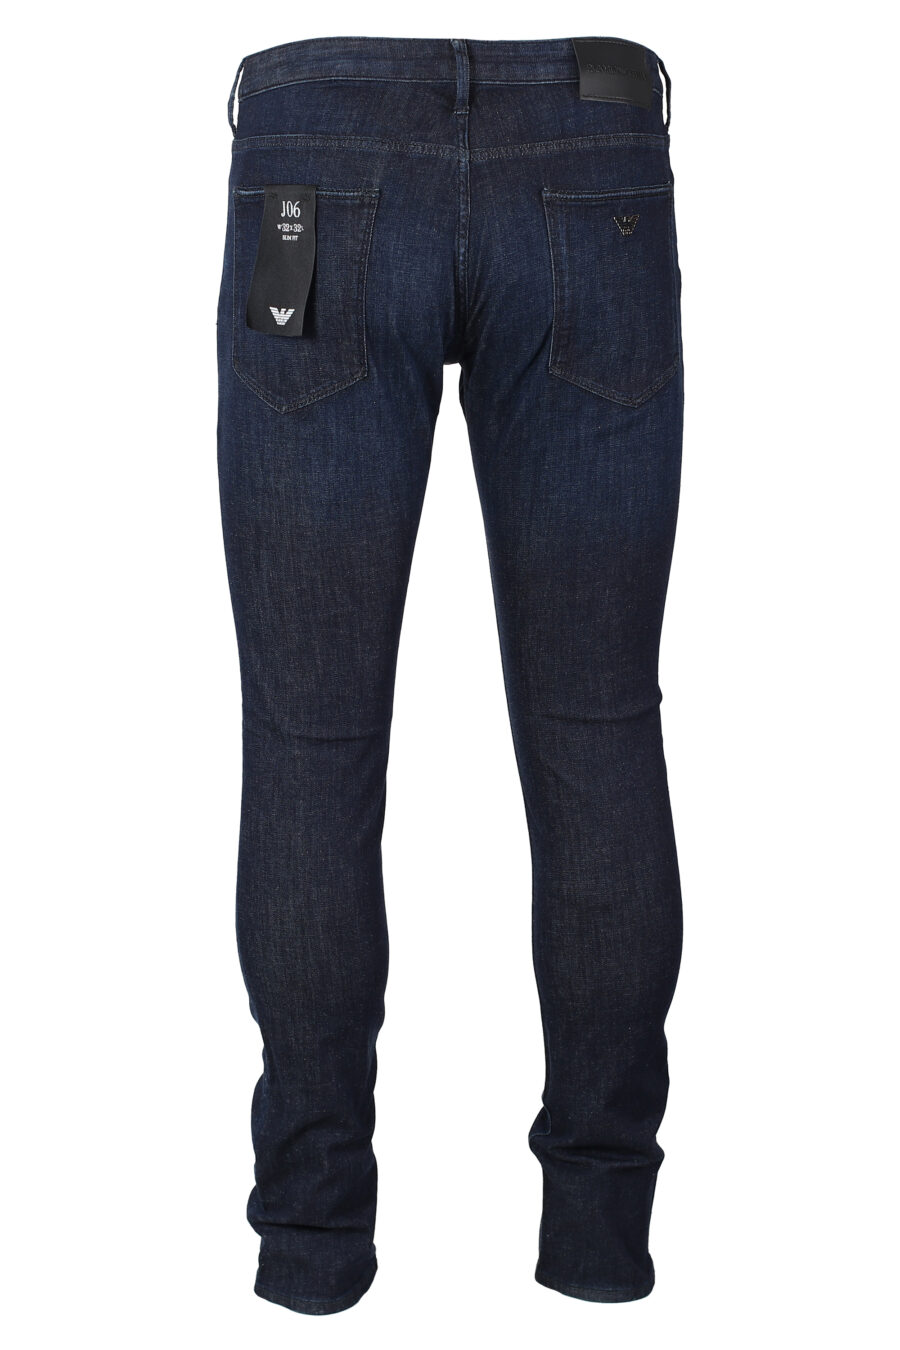 Halbgetragene dunkelblaue Jeans mit Metall-Mini-Logo - IMG 9930